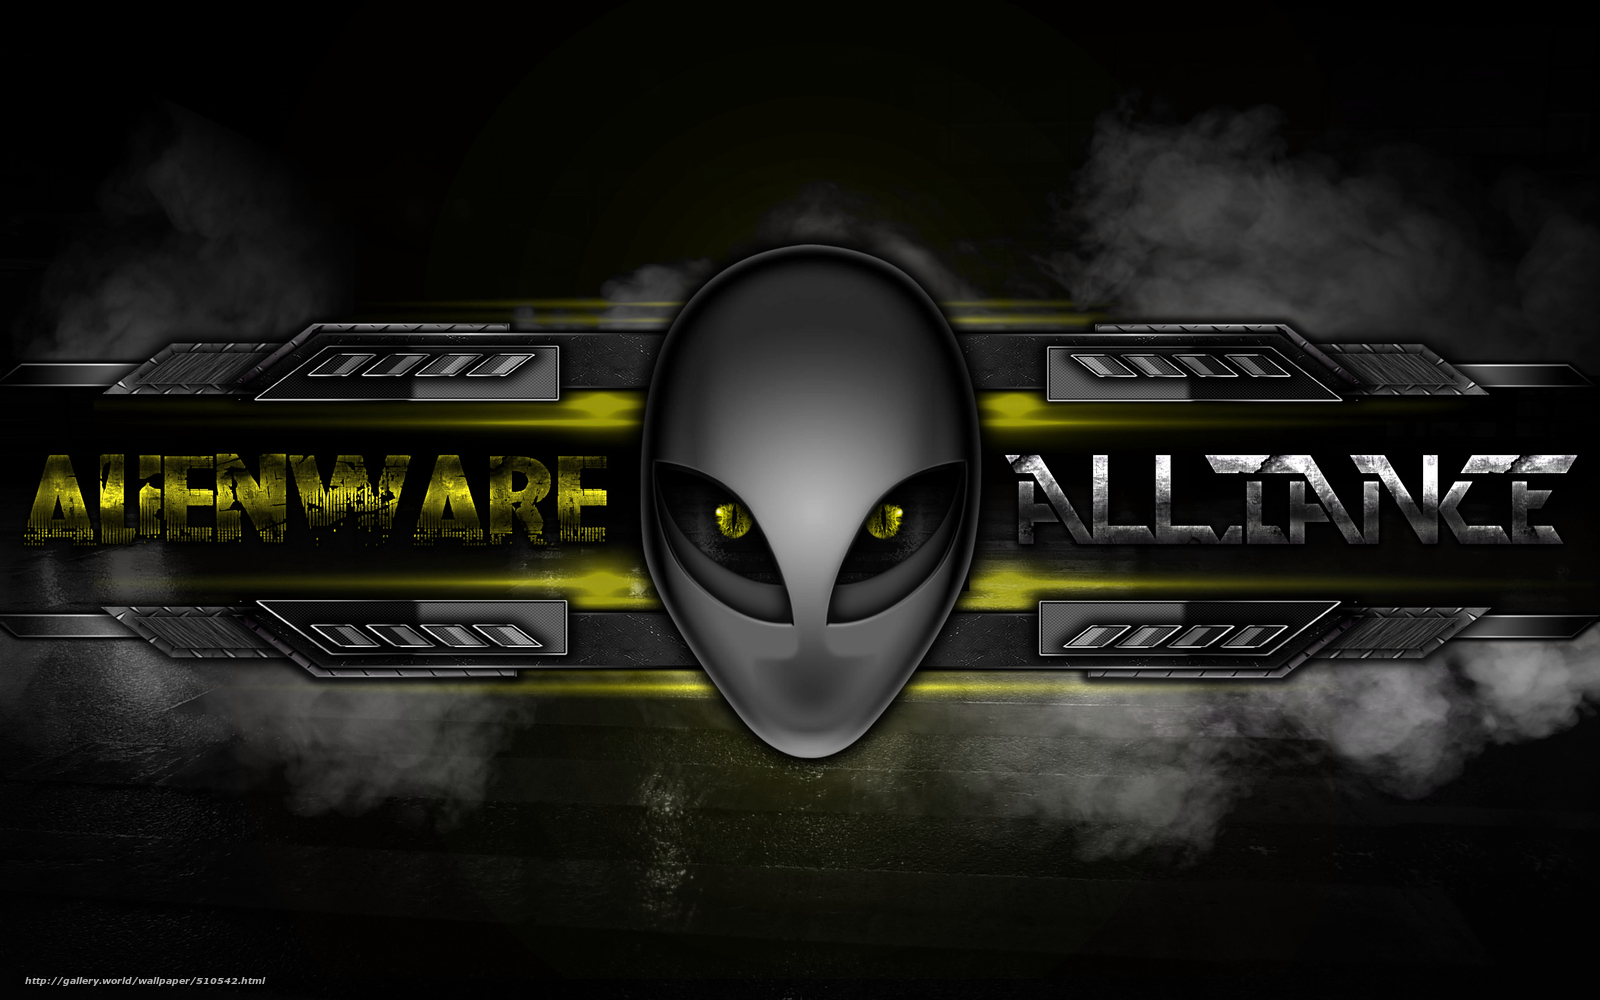 Wallpaper Alienware Alliance Gdefon Original